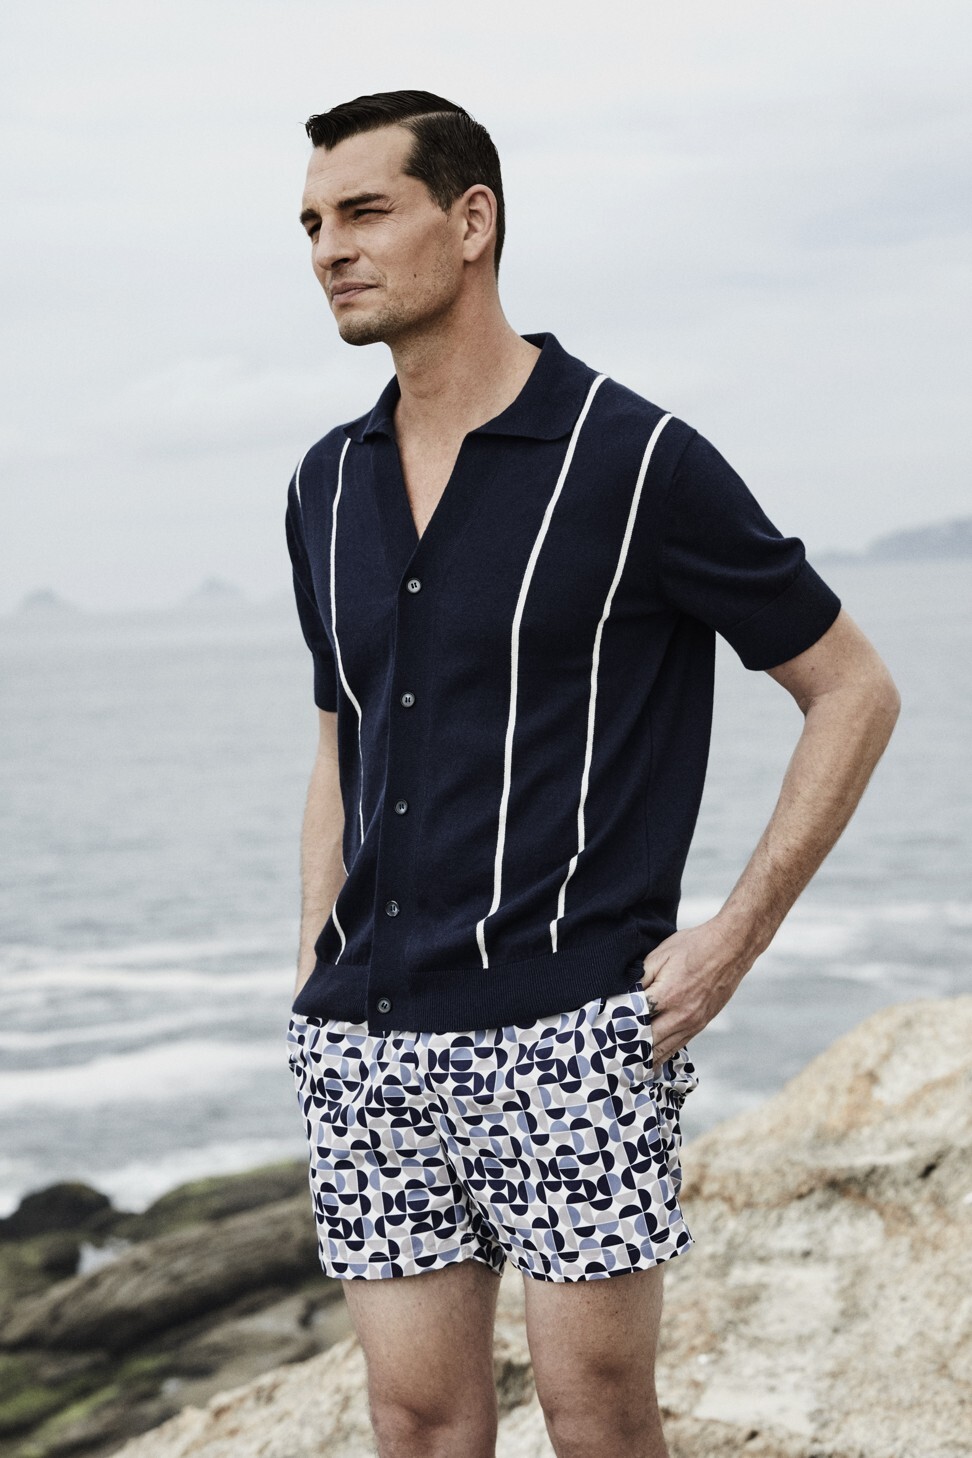 Men’s beachwear and resort wear brands offering stylish, versatile ...